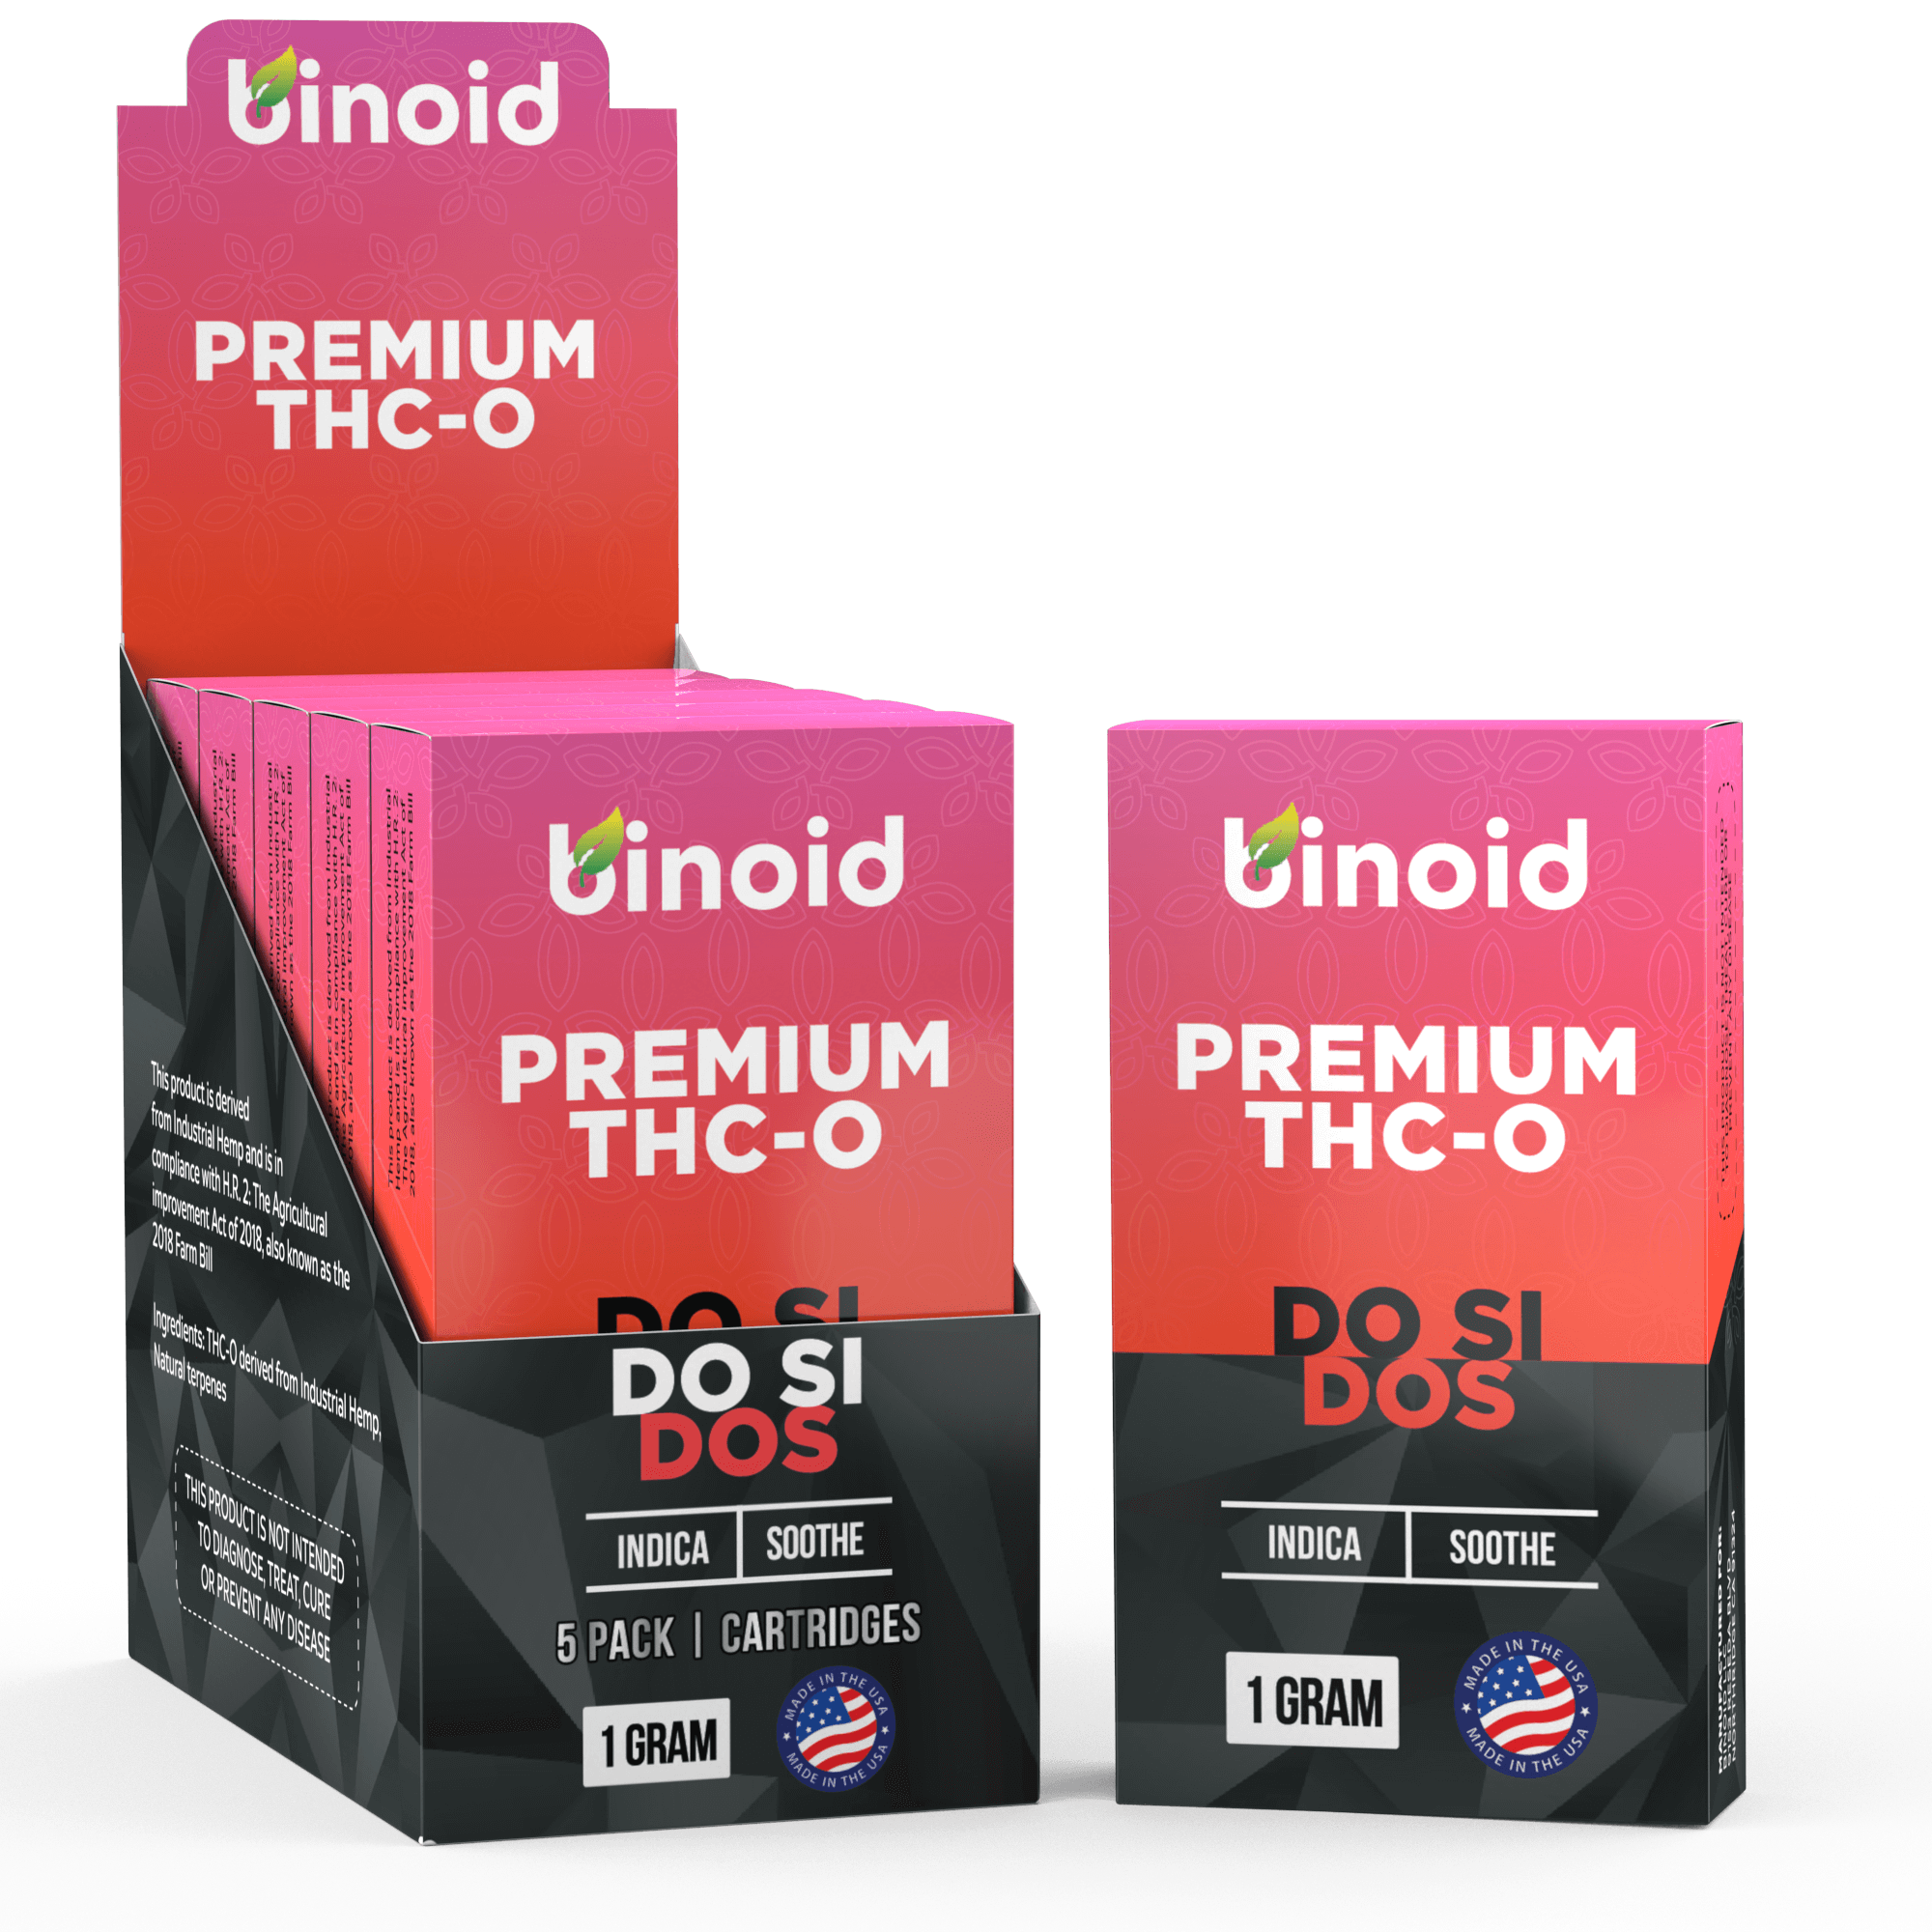 Binoid THC-O Vape Cartridge - Do Si Dos Best Price